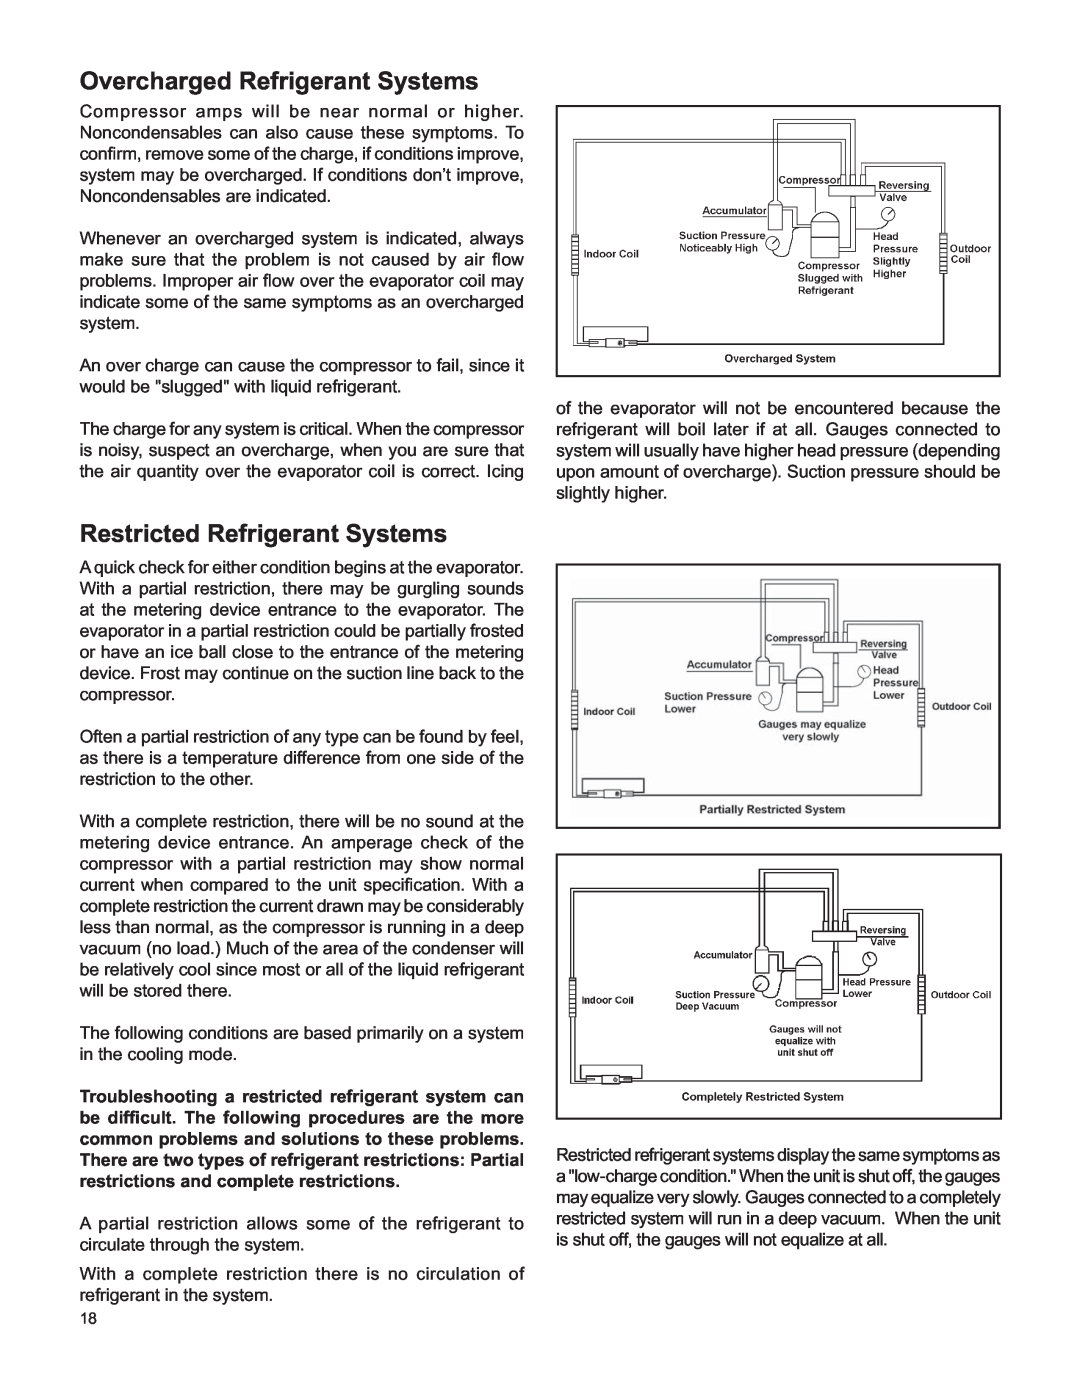 Friedrich H)A09K25, V(E service manual Overcharged Refrigerant Systems, Restricted Refrigerant Systems 